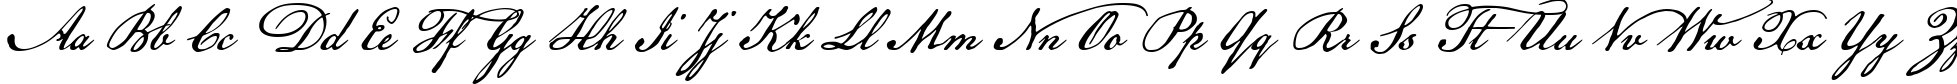 Пример написания английского алфавита шрифтом American Scribe